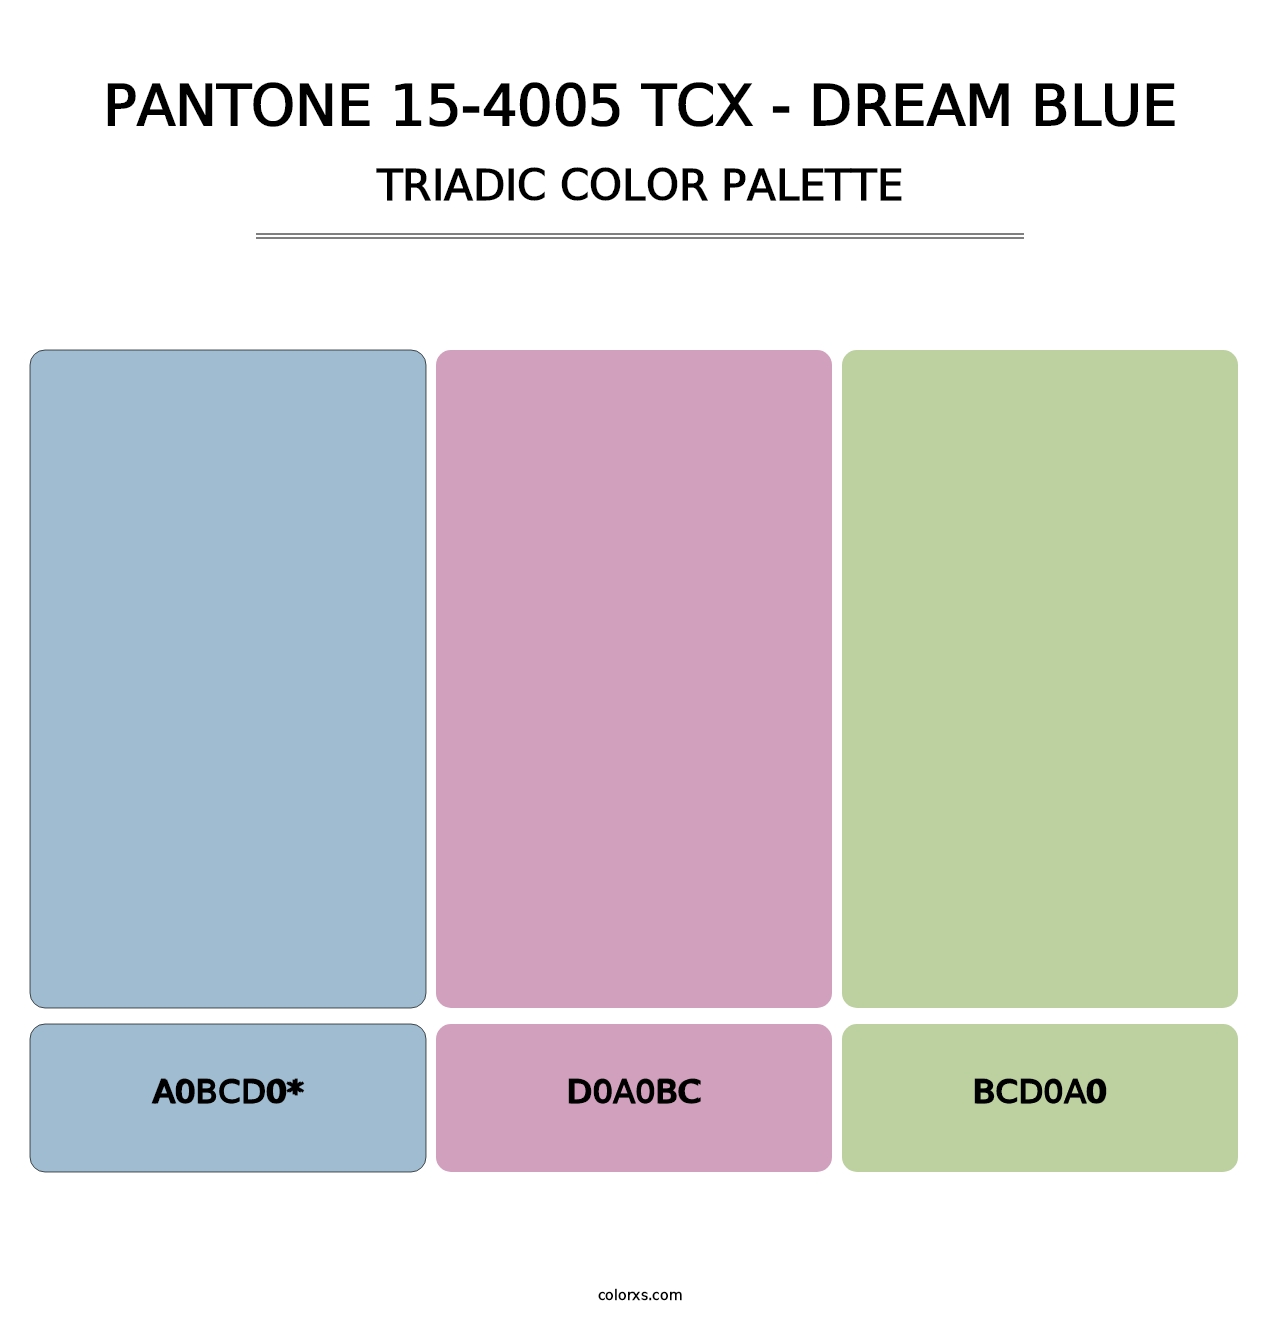 PANTONE 15-4005 TCX - Dream Blue - Triadic Color Palette